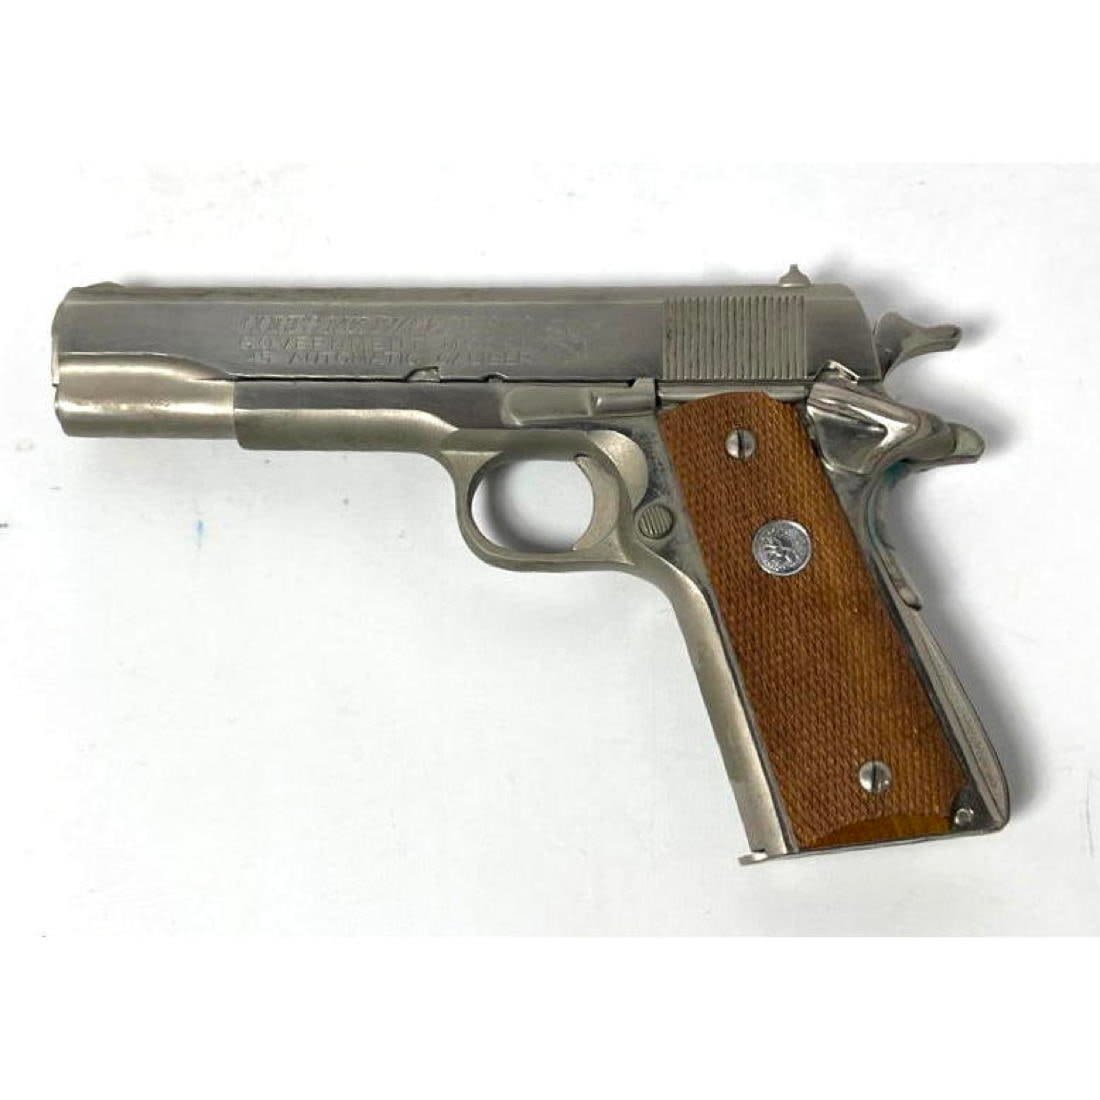 Colt .45 MK IV Series 70 government